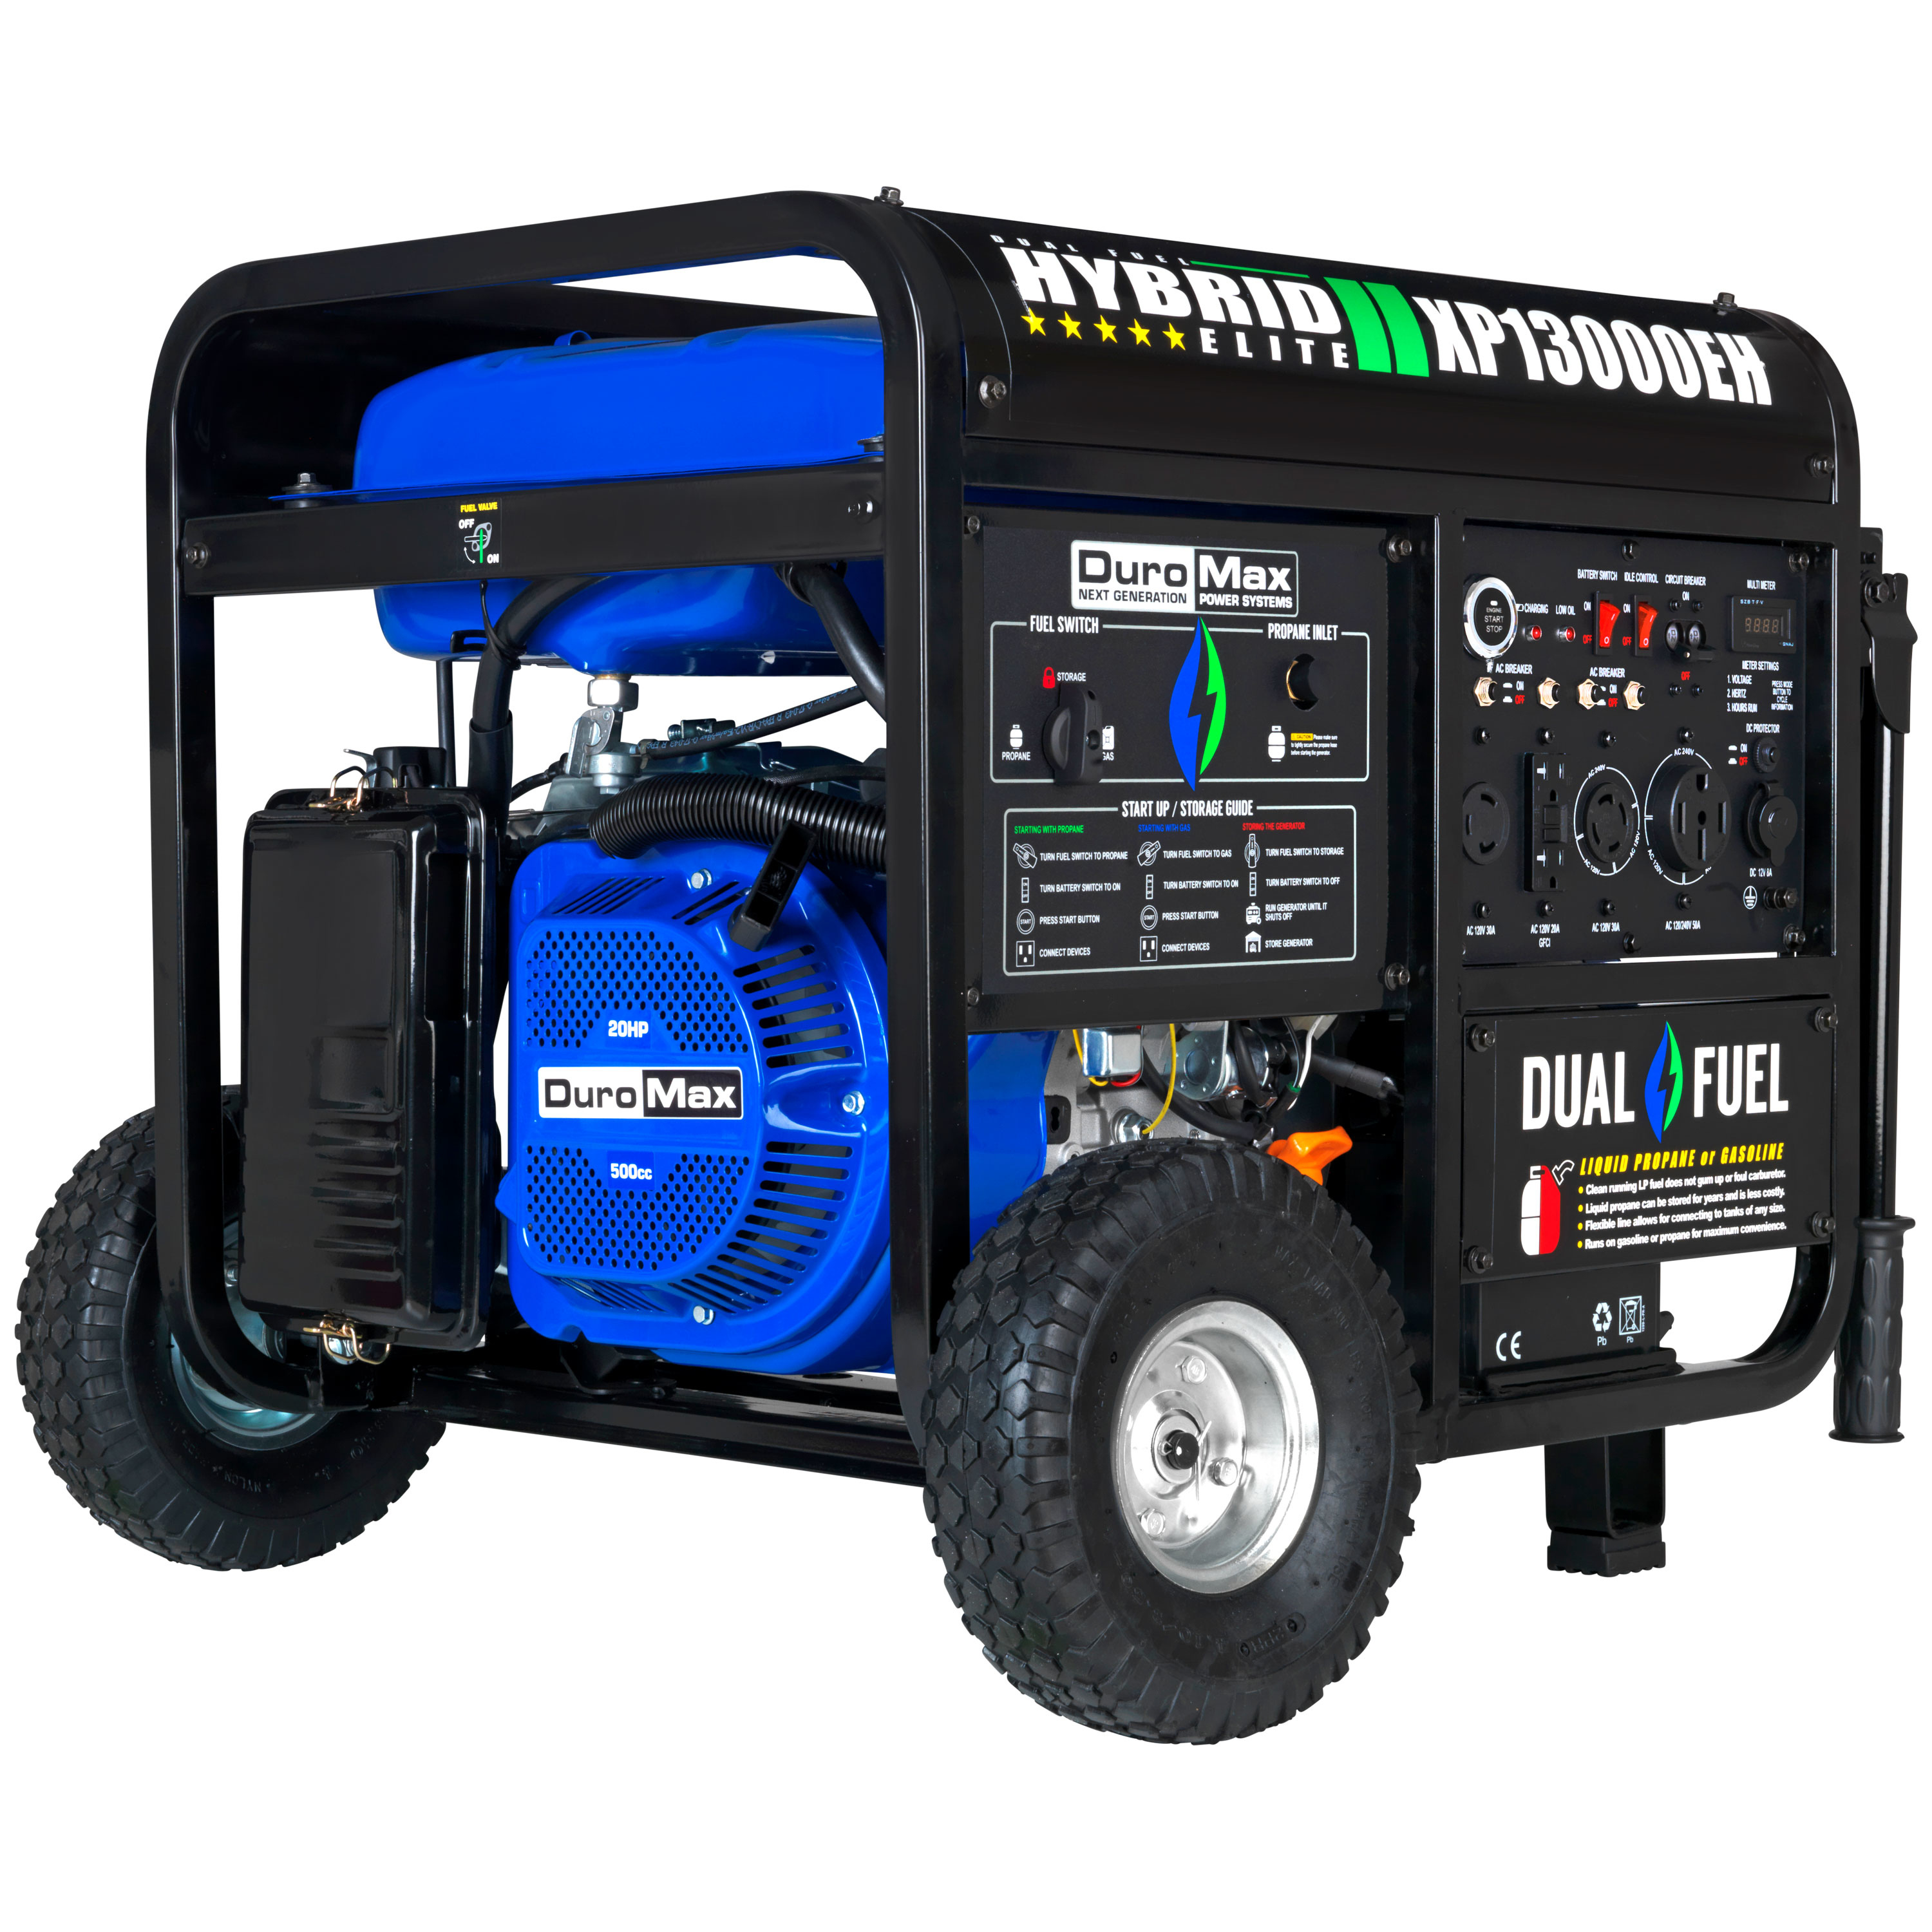 DuroMax XP13000EH 13,000-Watt 500cc Portable Hybrid Gas Propane Generator - image 1 of 14